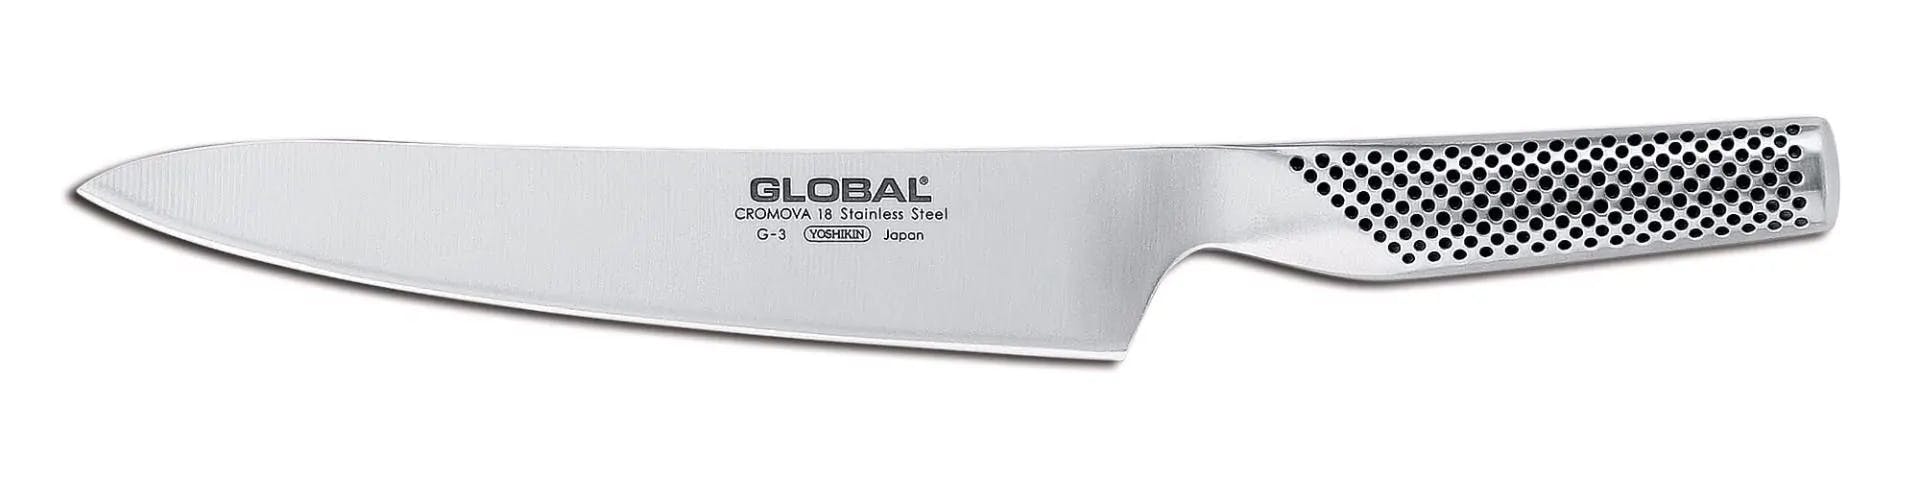 Global 6 Piece Knife Block Set